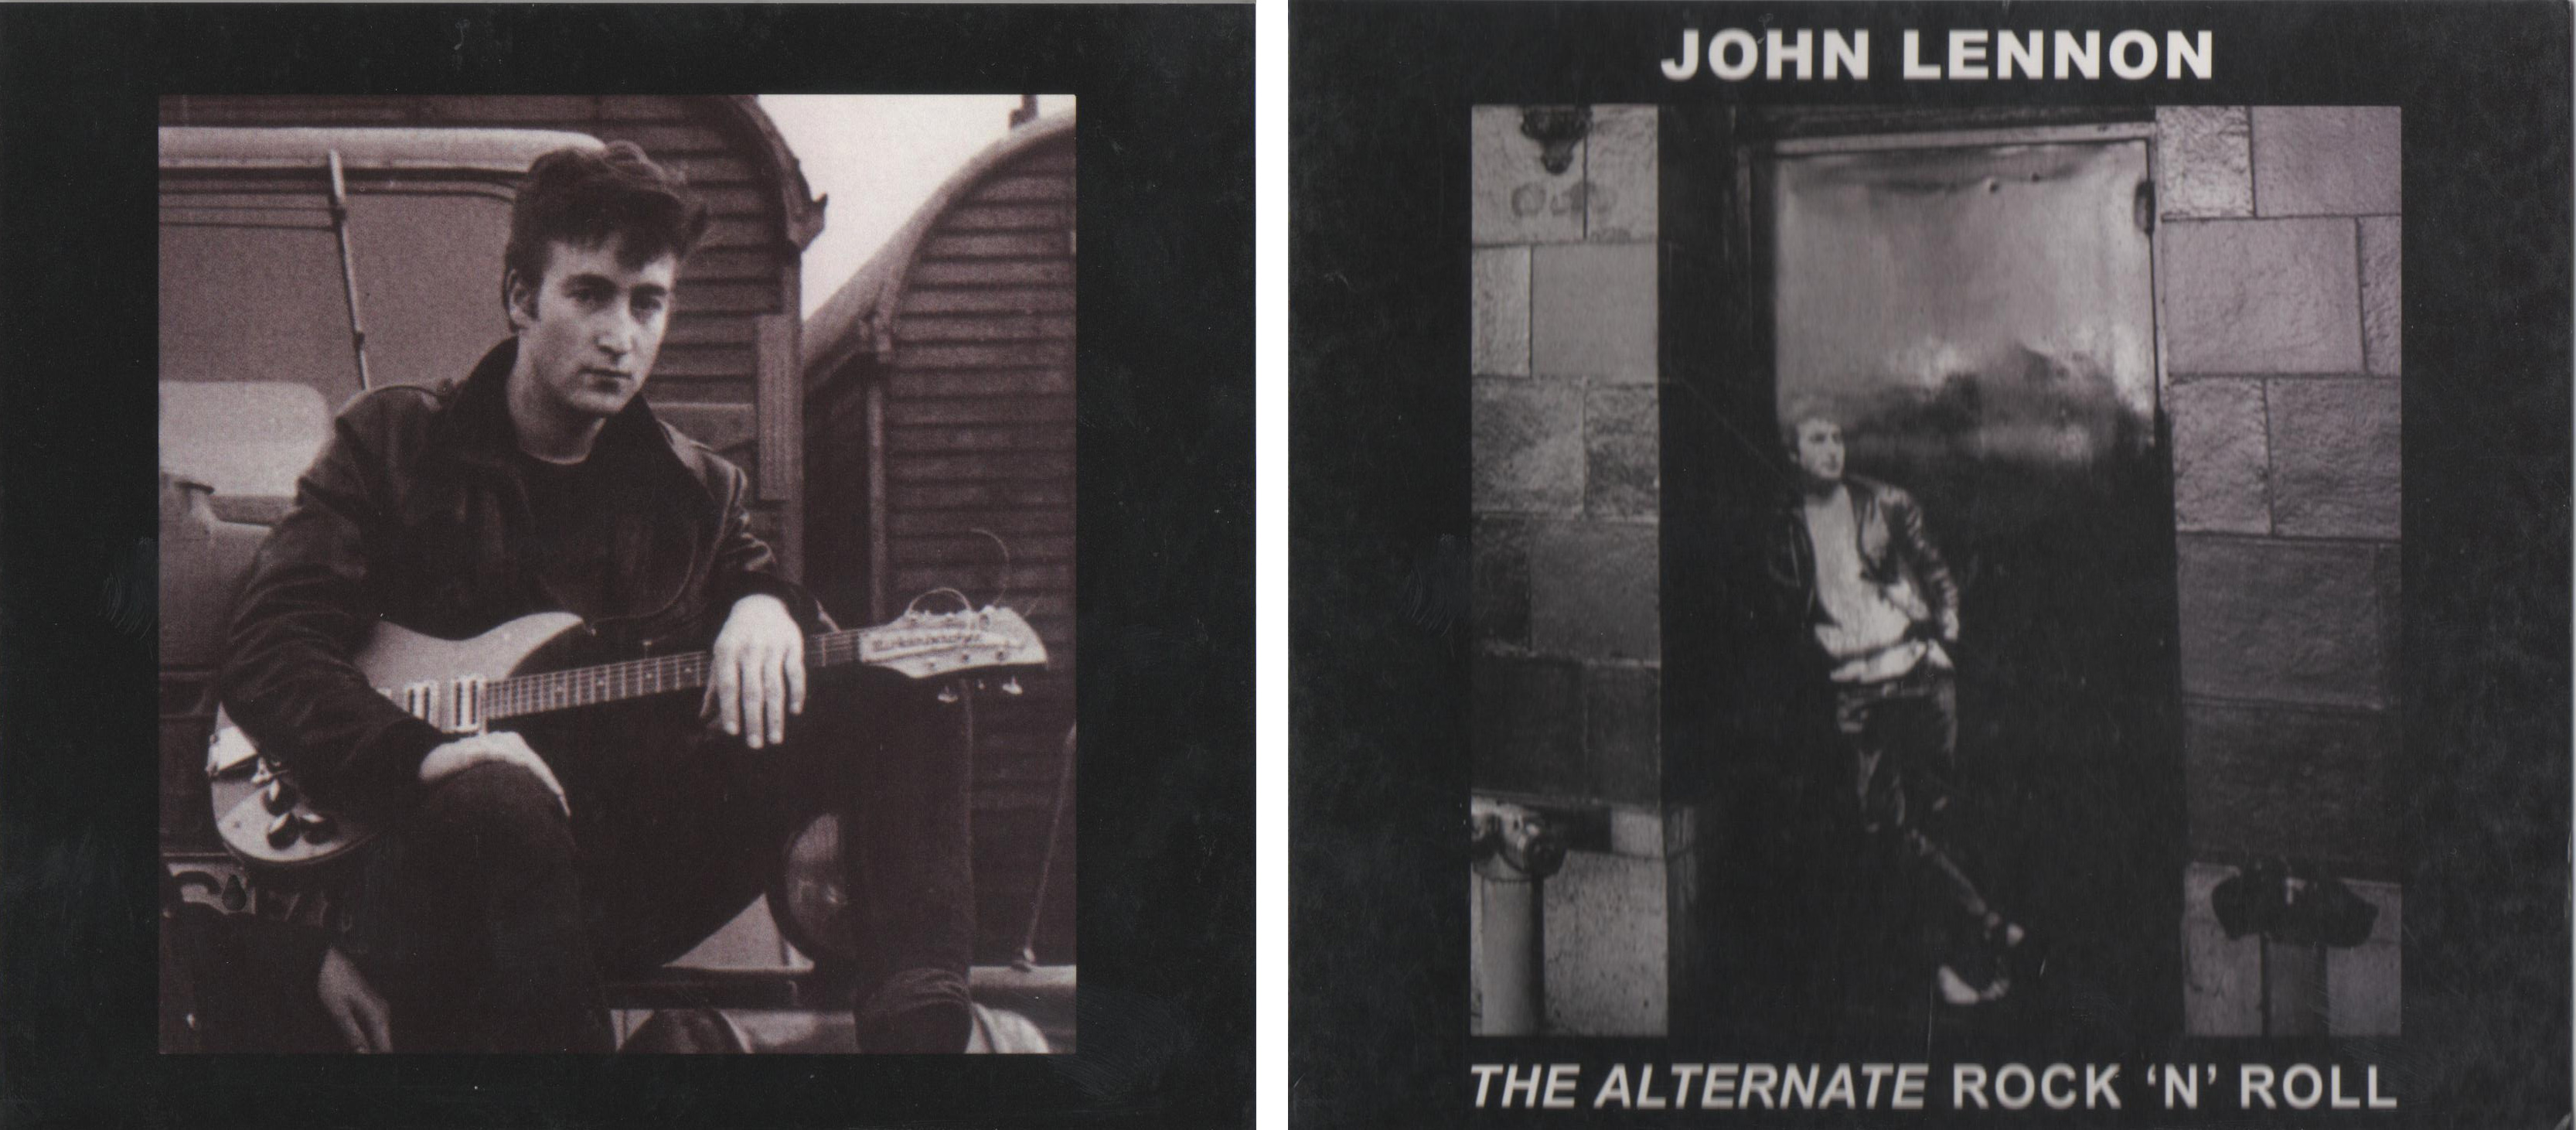 JohnLennon-AlternateRockNRoll (9).jpg